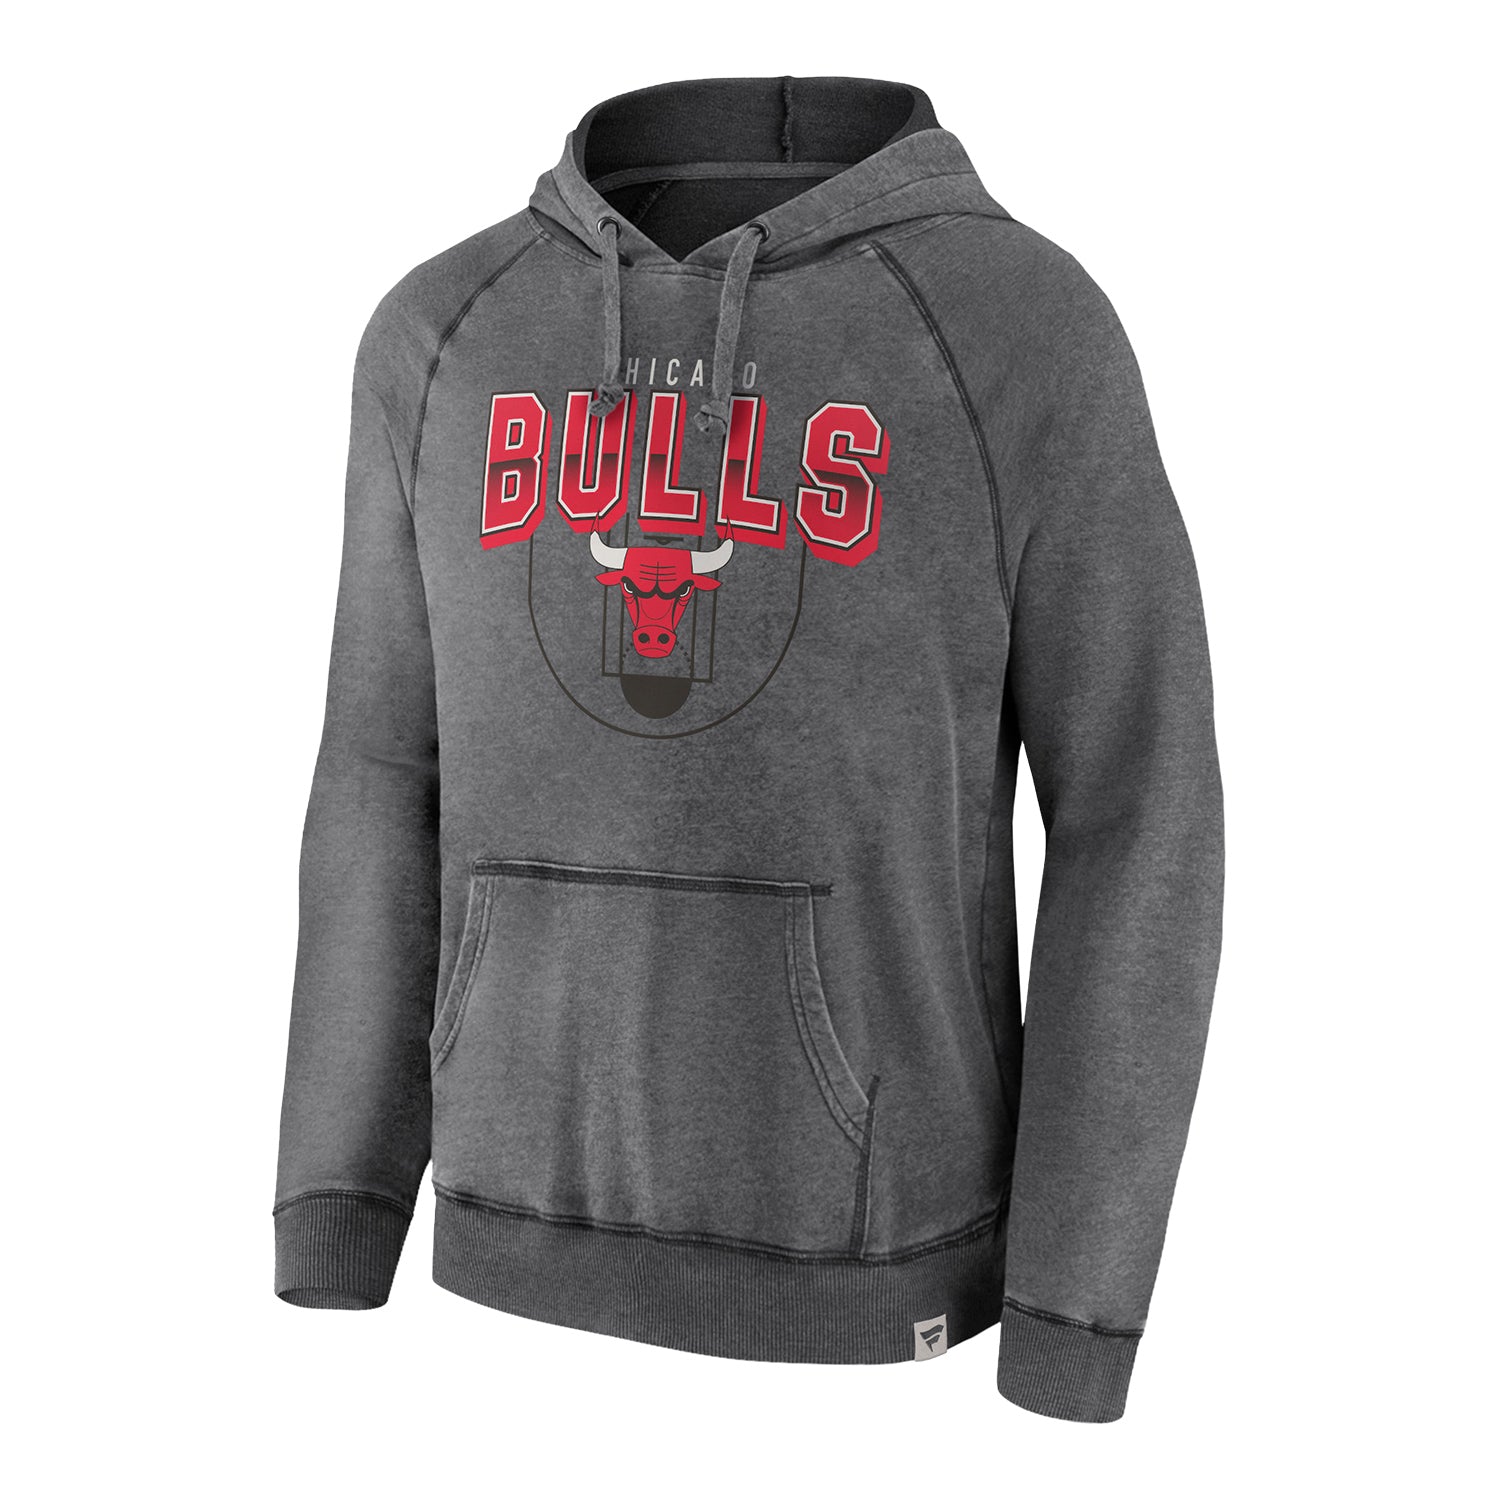 chicago bulls hoodie grey